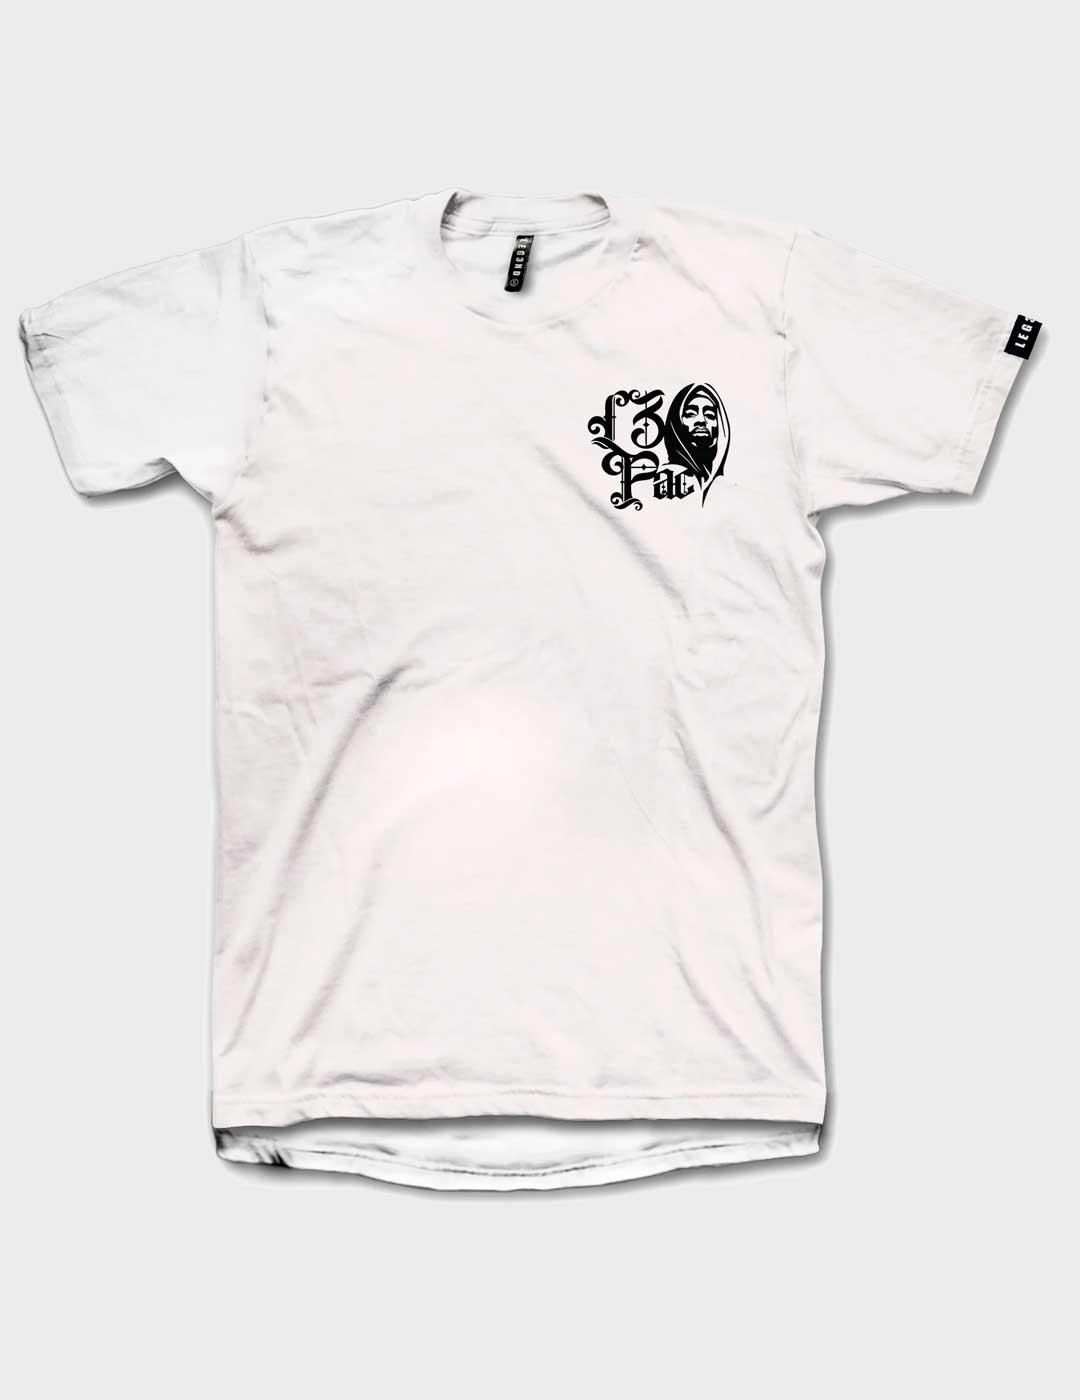 Camiseta Leg3nd Tupac blanca unisex